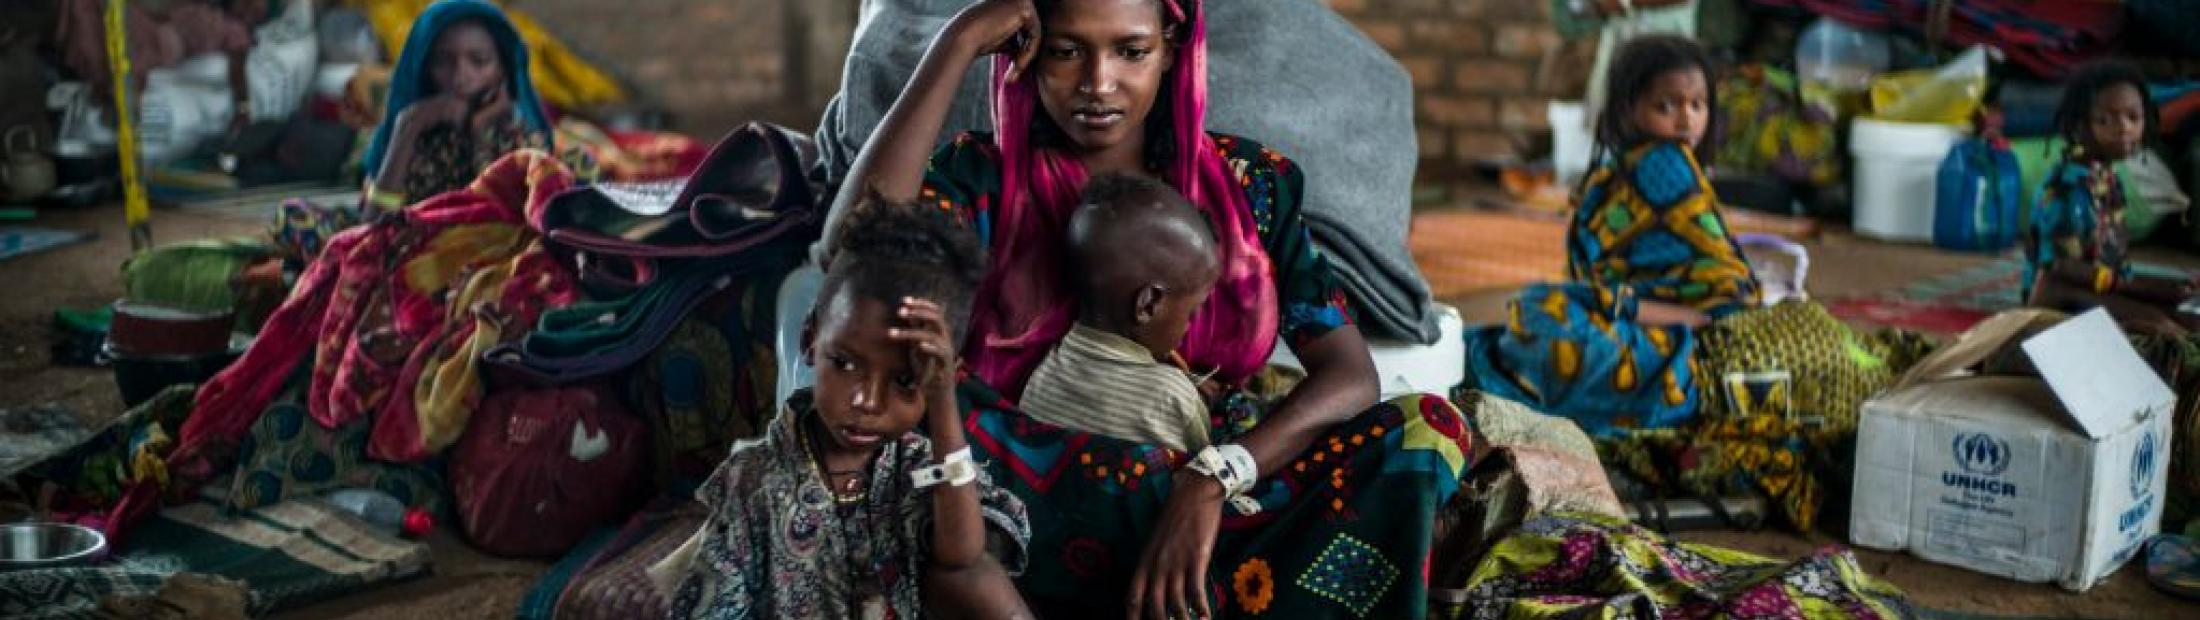 Cerca de 800.000 refugiados sufren escasez de alimentos en África